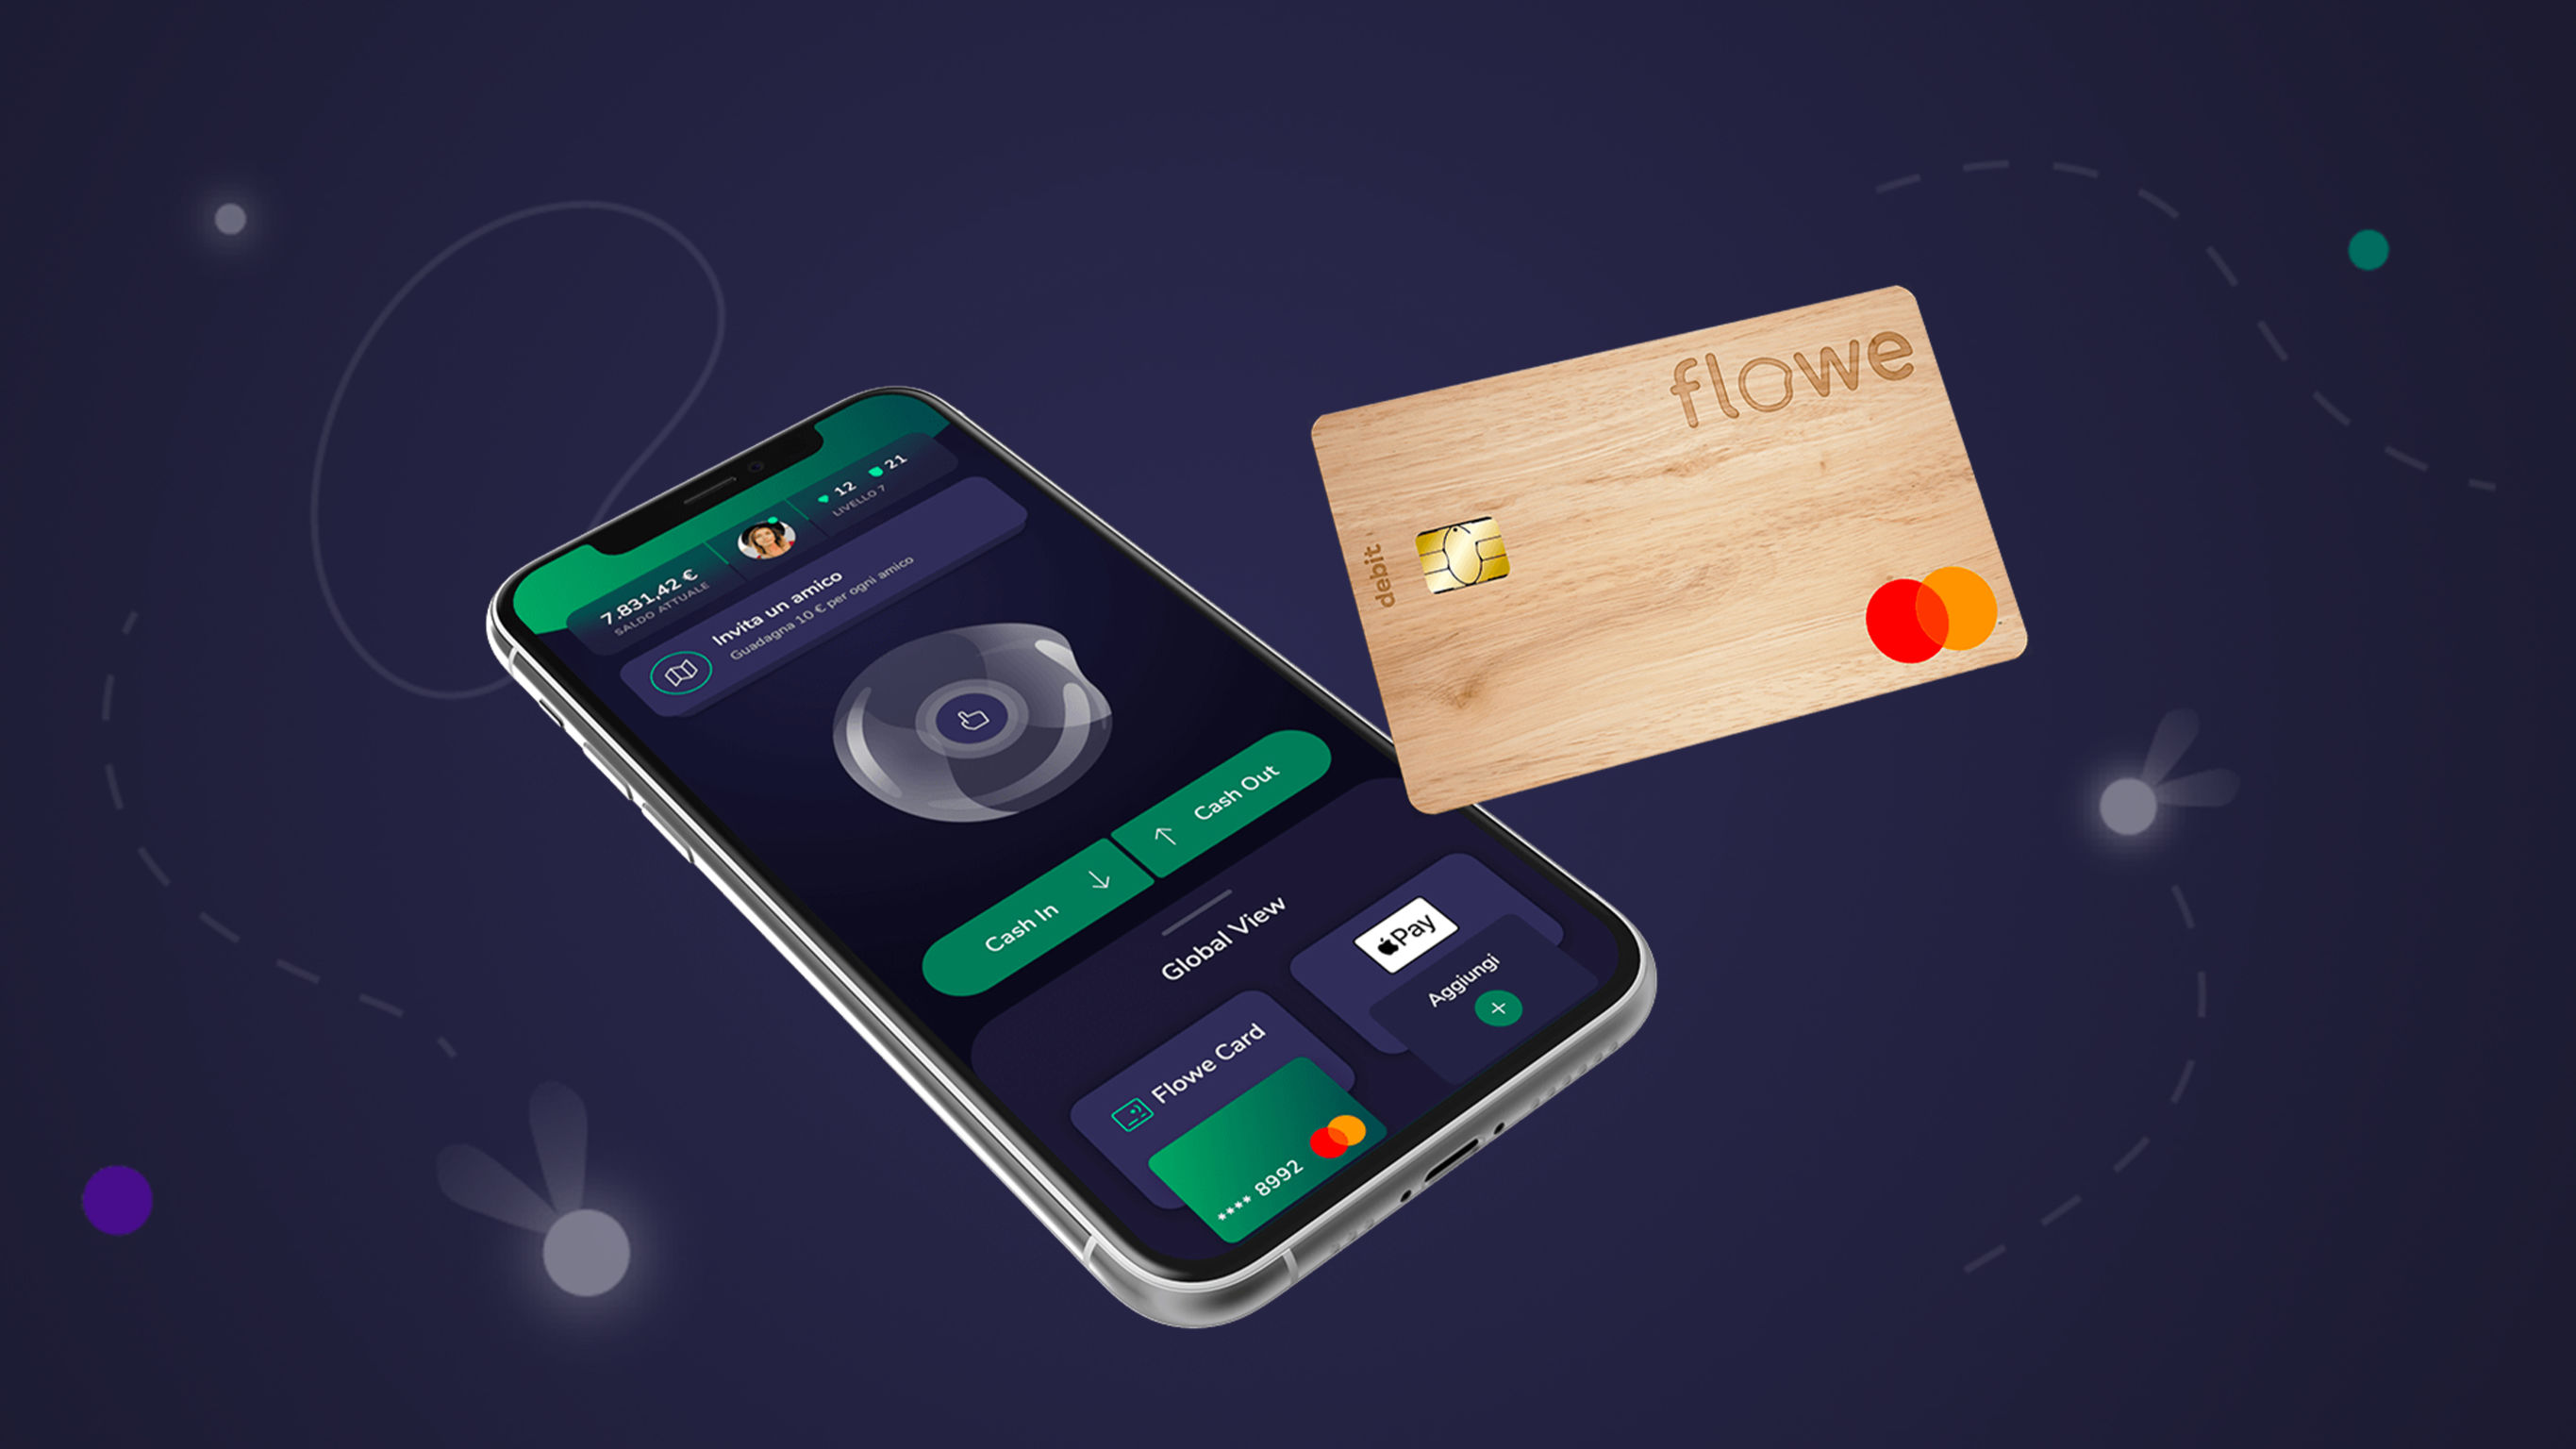 Flowe: better banking, better being